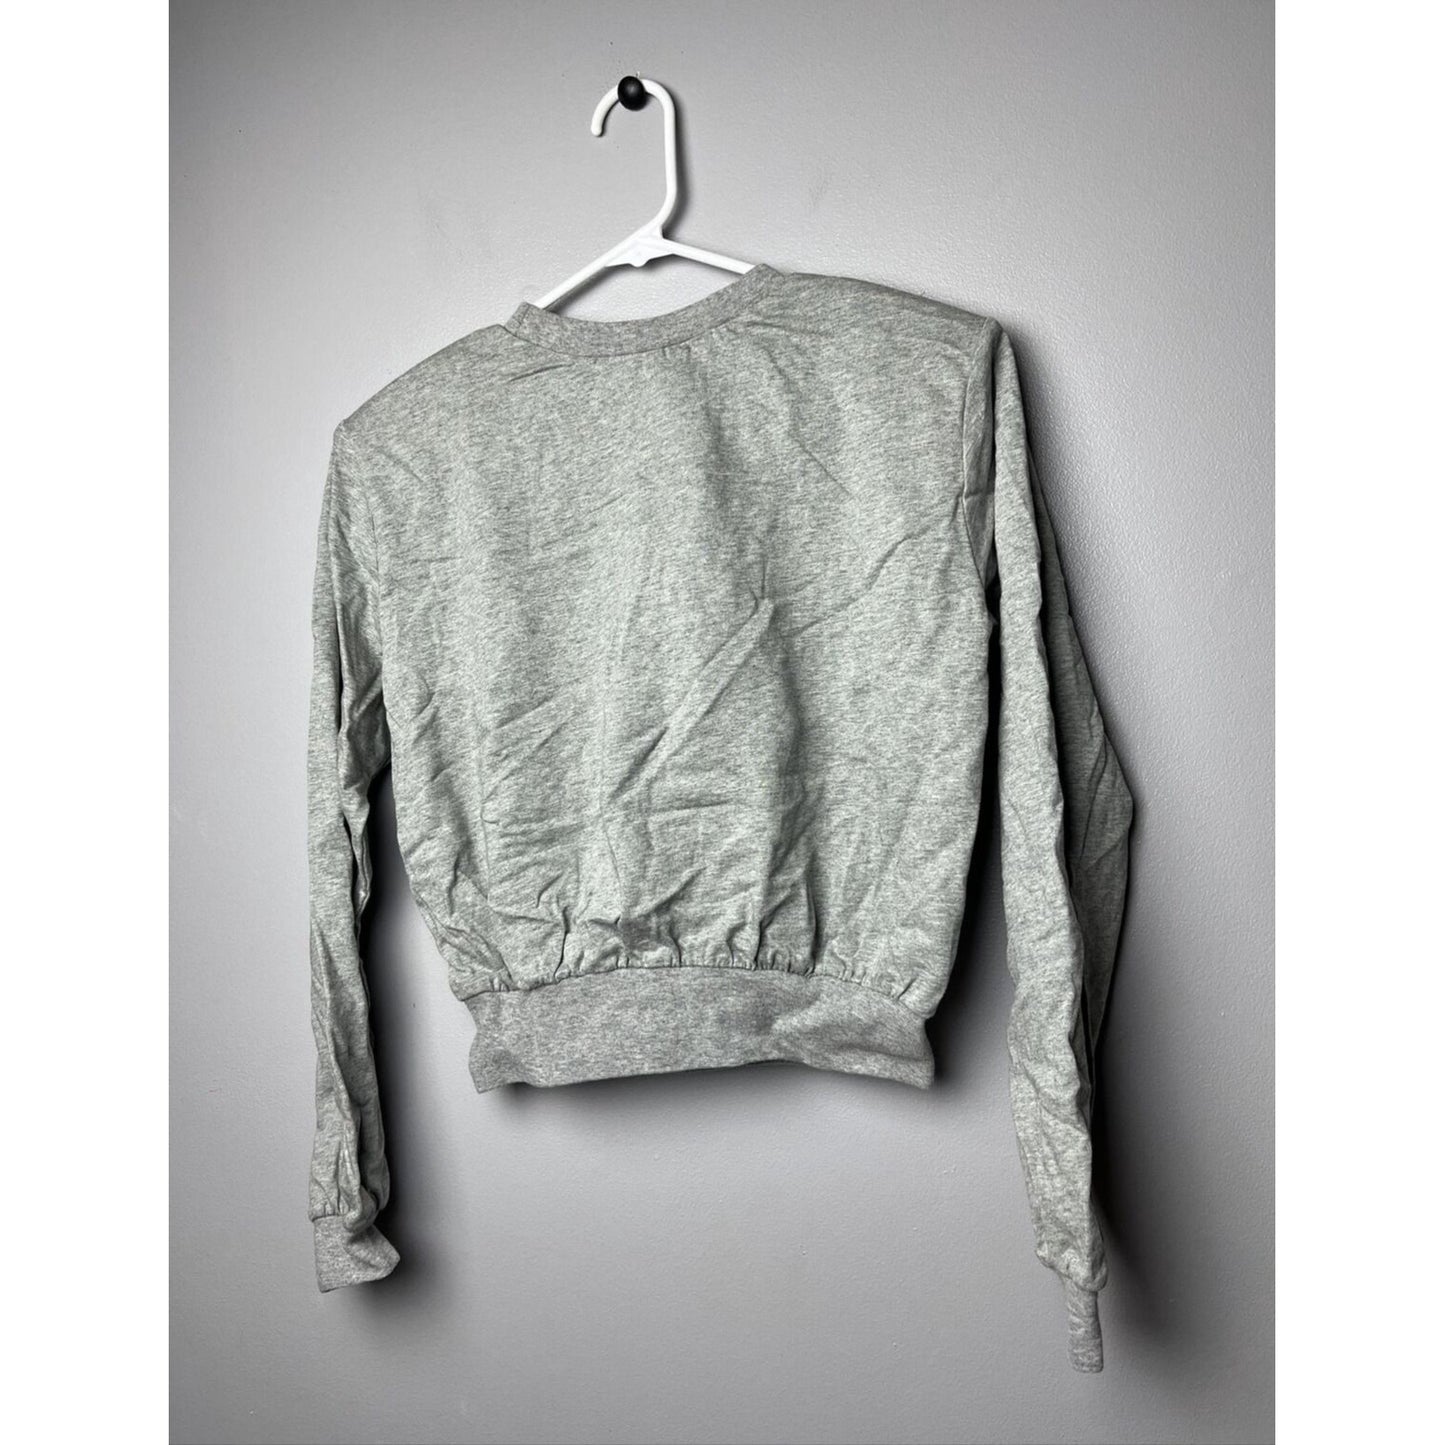 NWT ASTR the Label Sweatshirt Gray Volume Shoulder Size X-Small